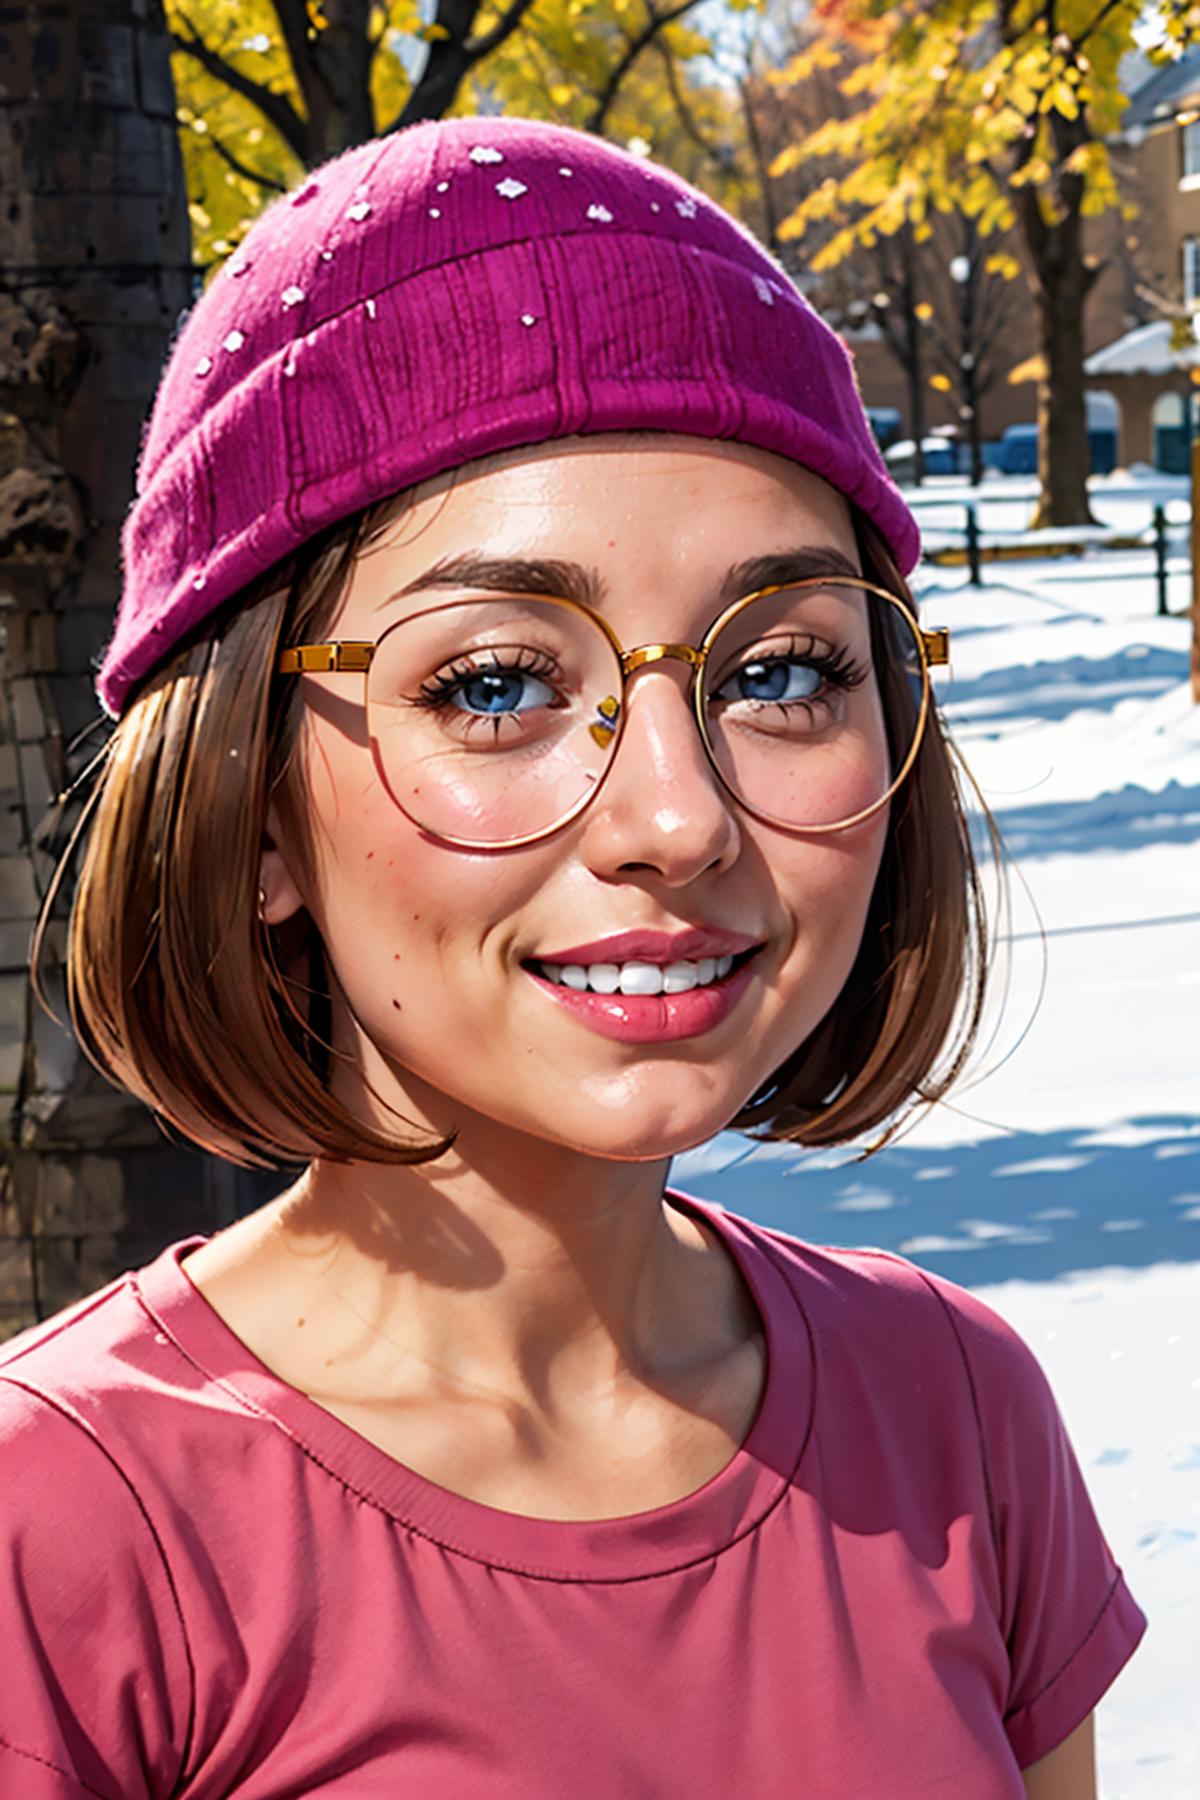 Meg Griffin (Familyguy) image by wikkitikki